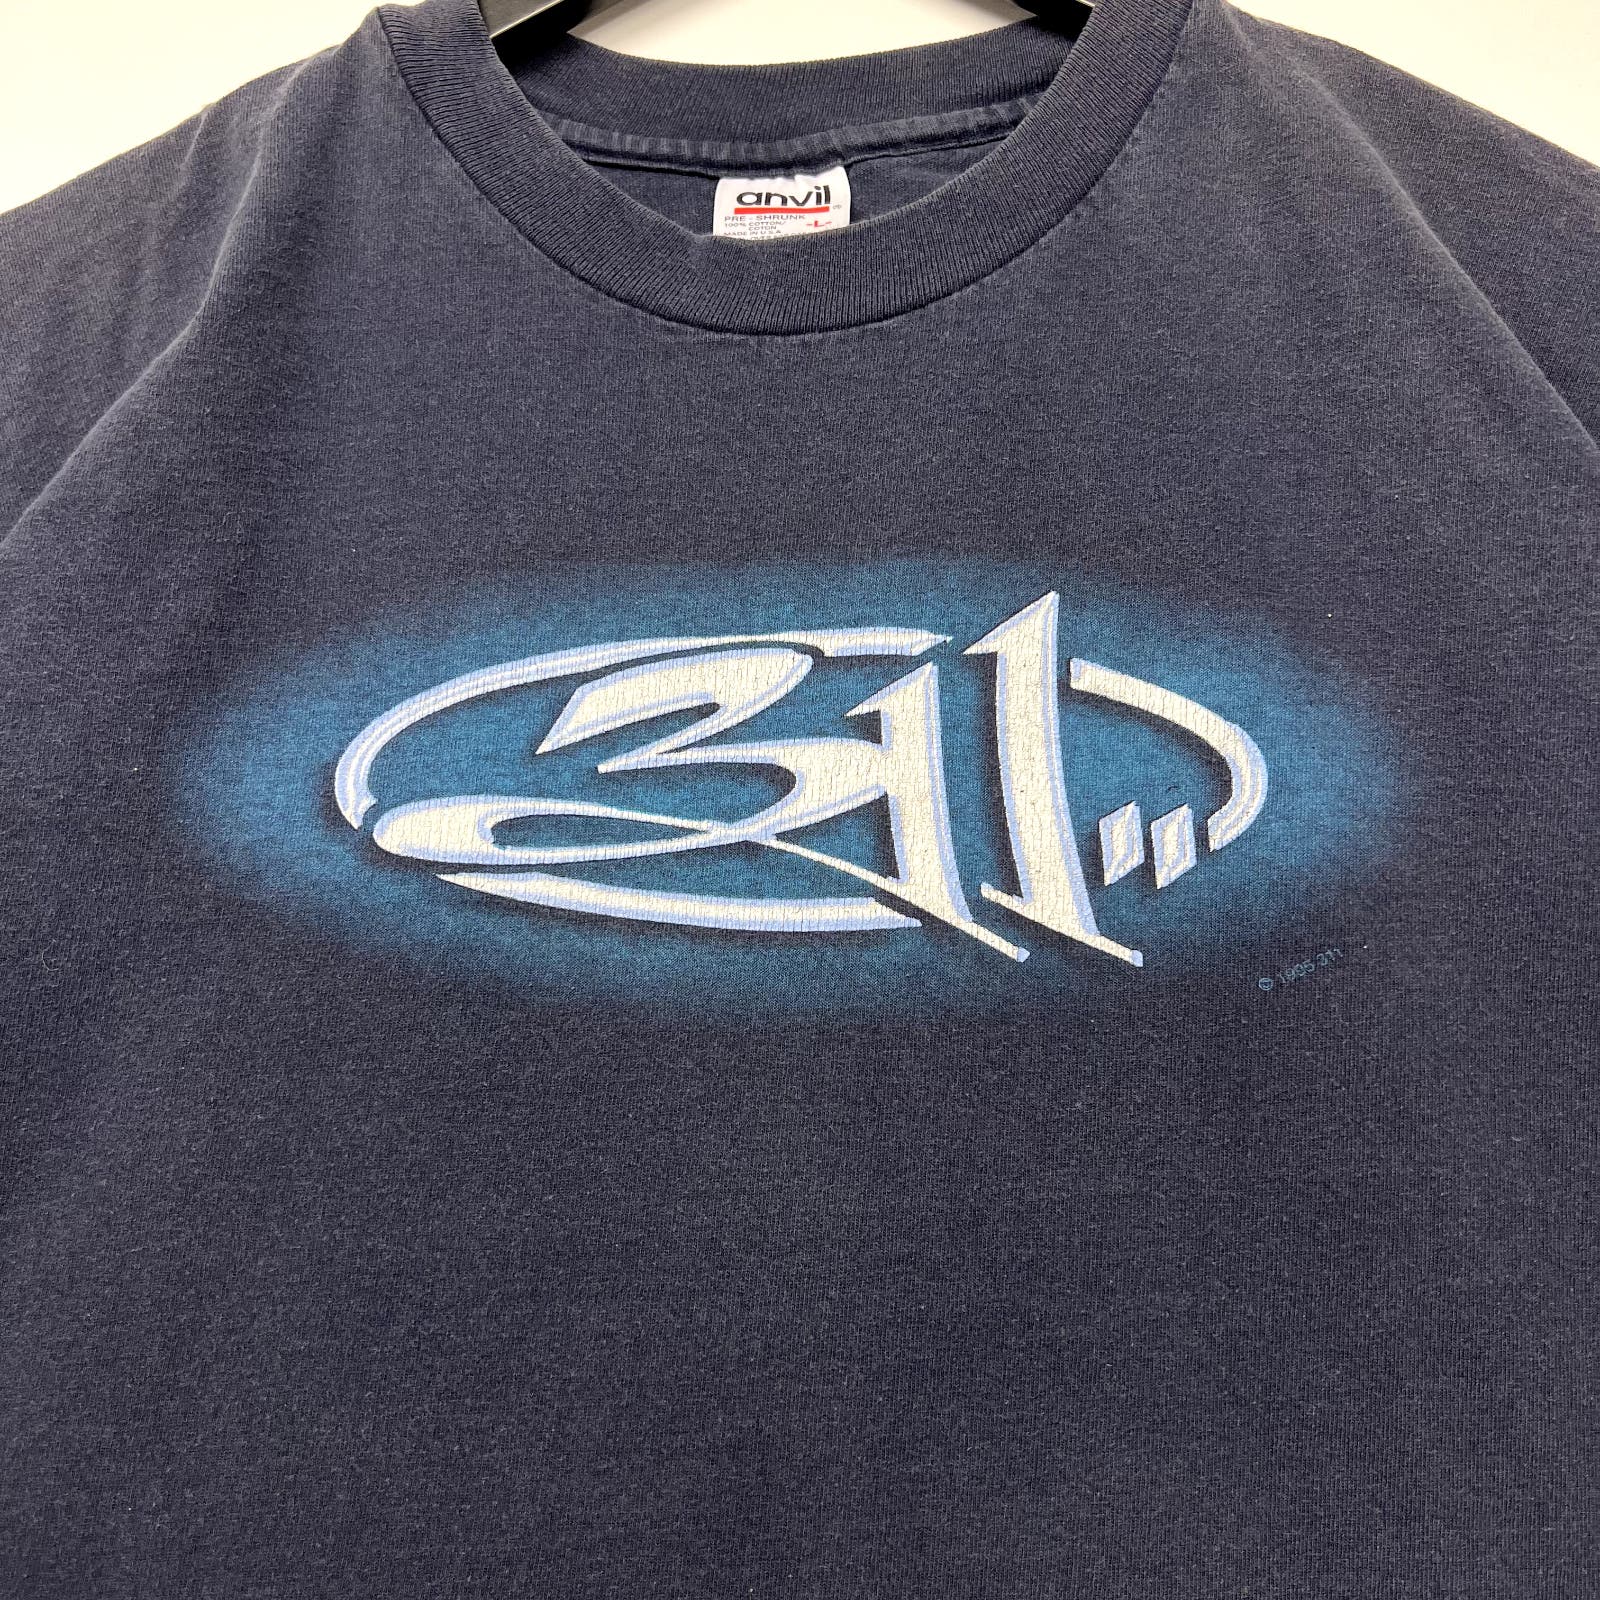 Vintage 1995 311 Three Eleven Blue T-Shirt Size L Ska Alien Head